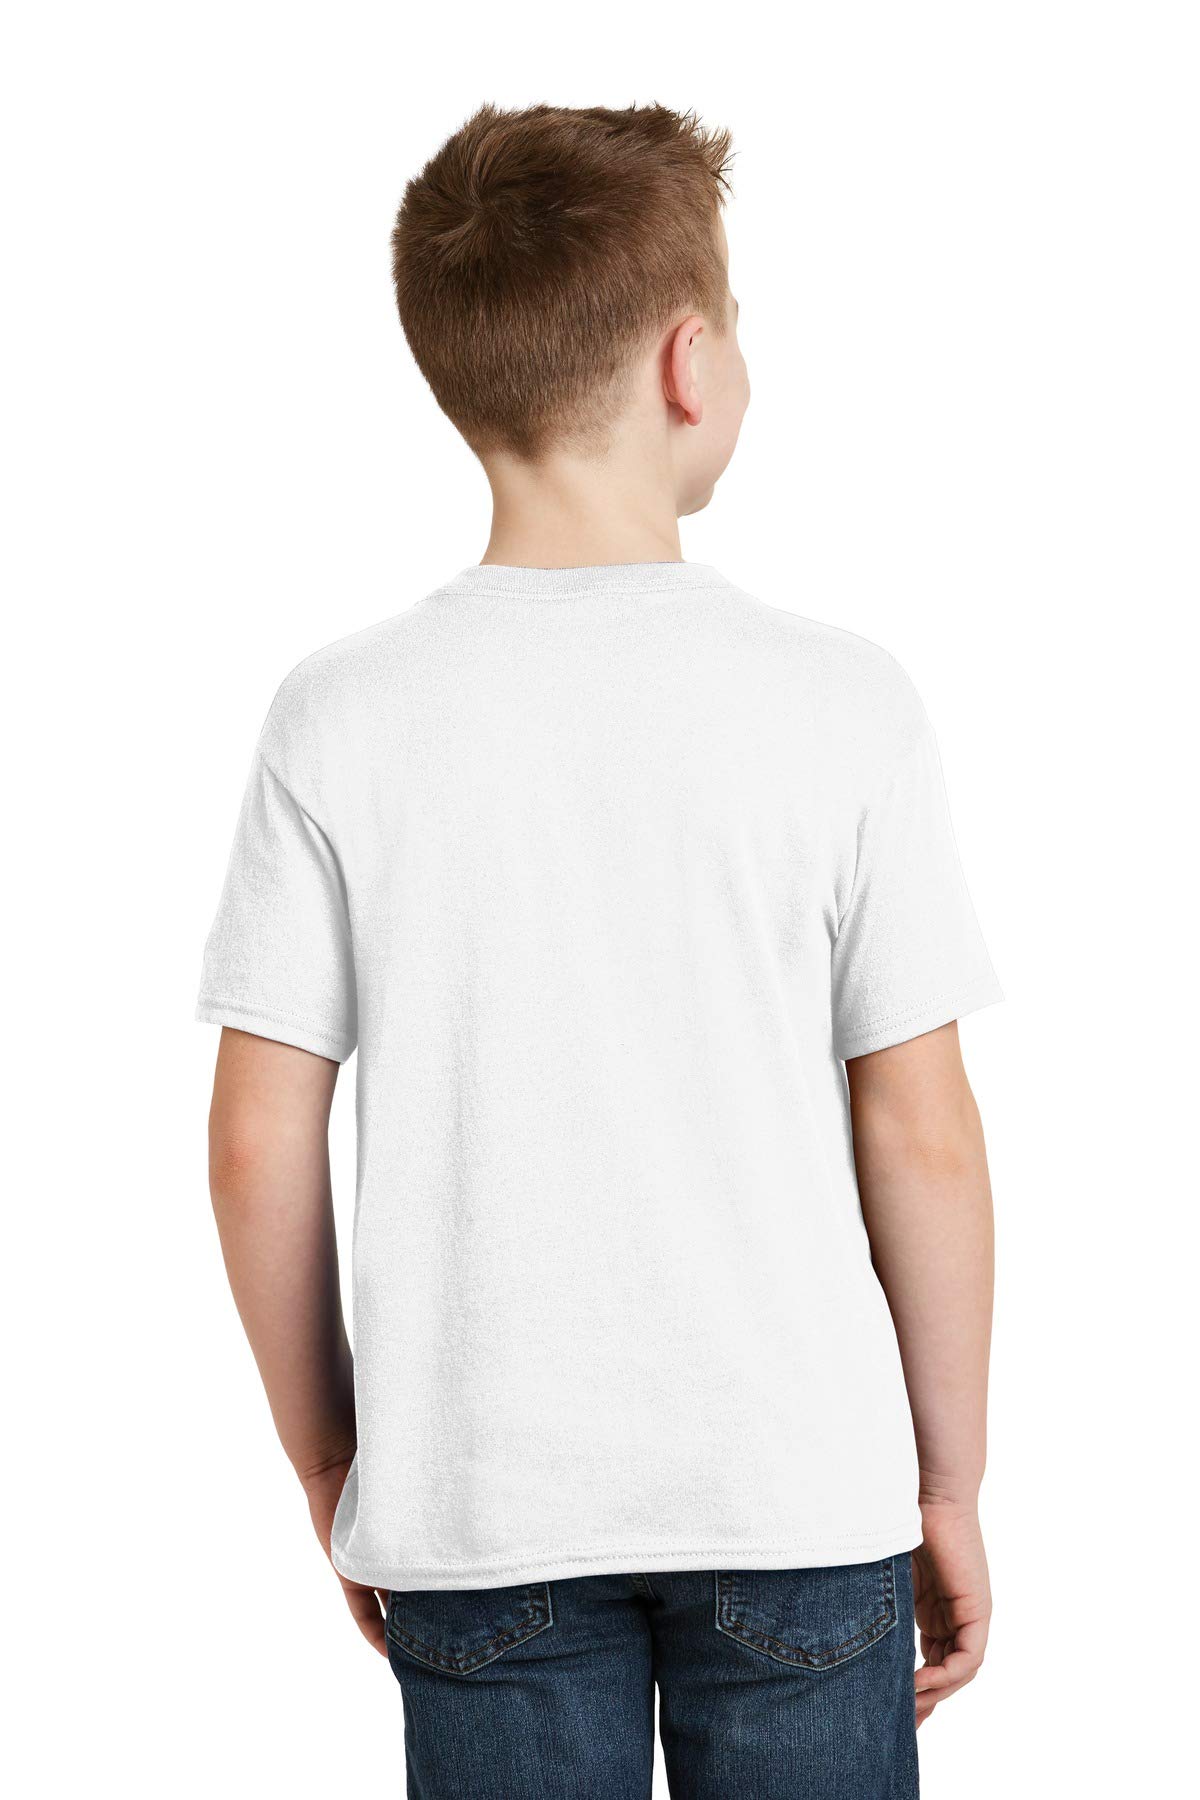 Hanes Boys ComfortBlend EcoSmart 50/50 Cotton/Poly T-Shirt